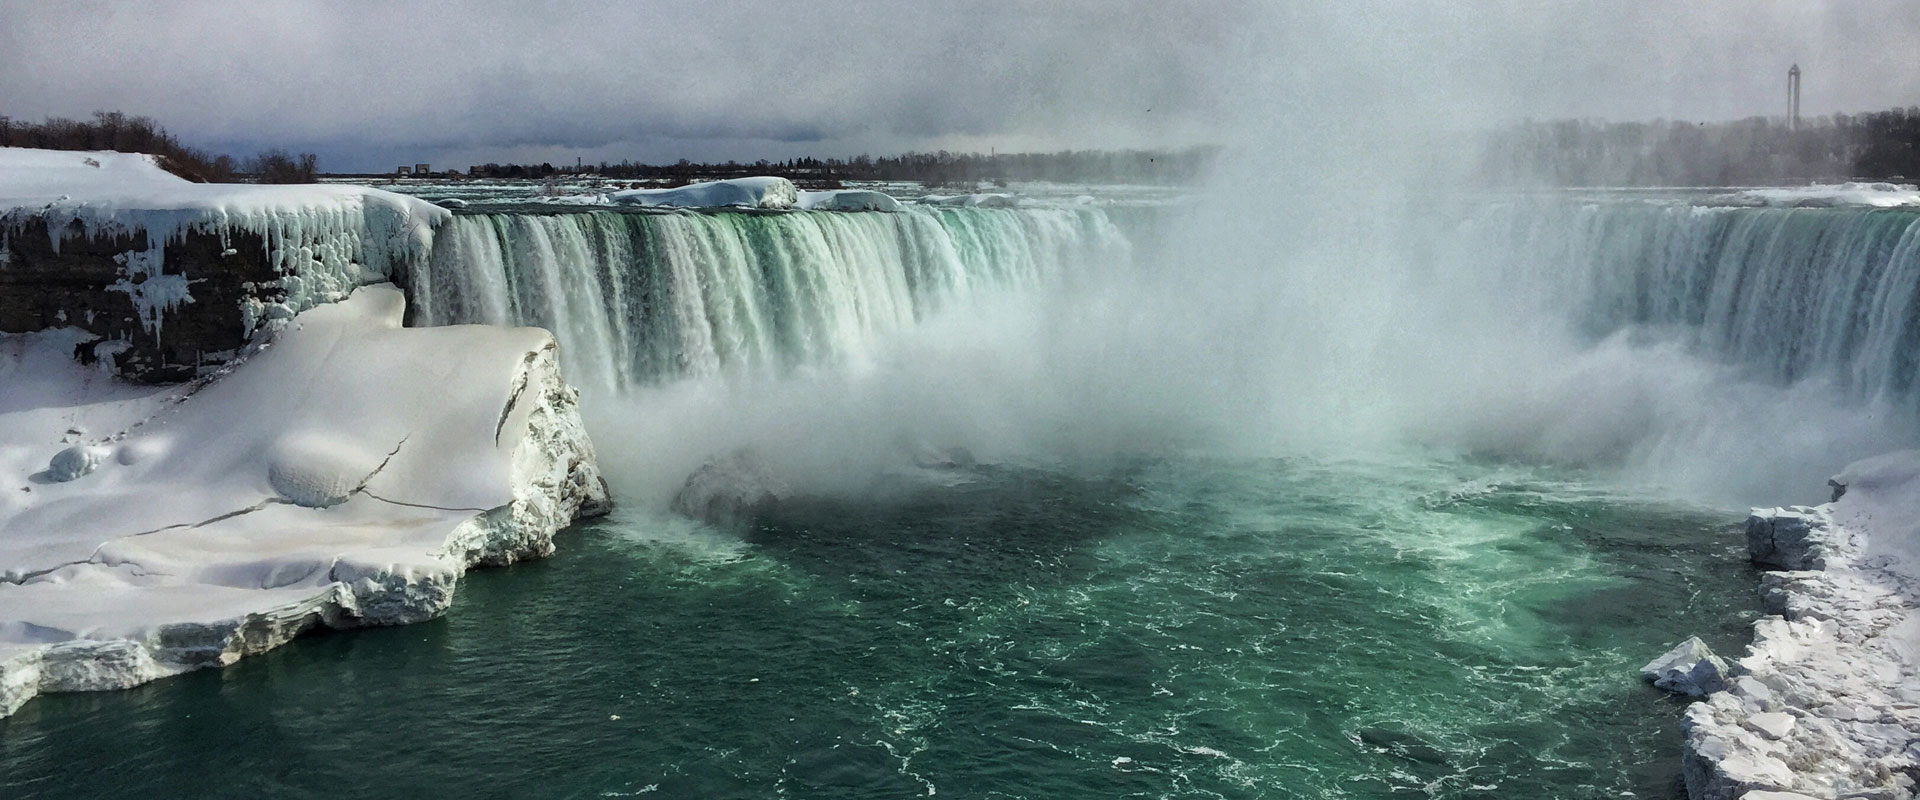 A December Trip to Niagara Falls ToNiagara